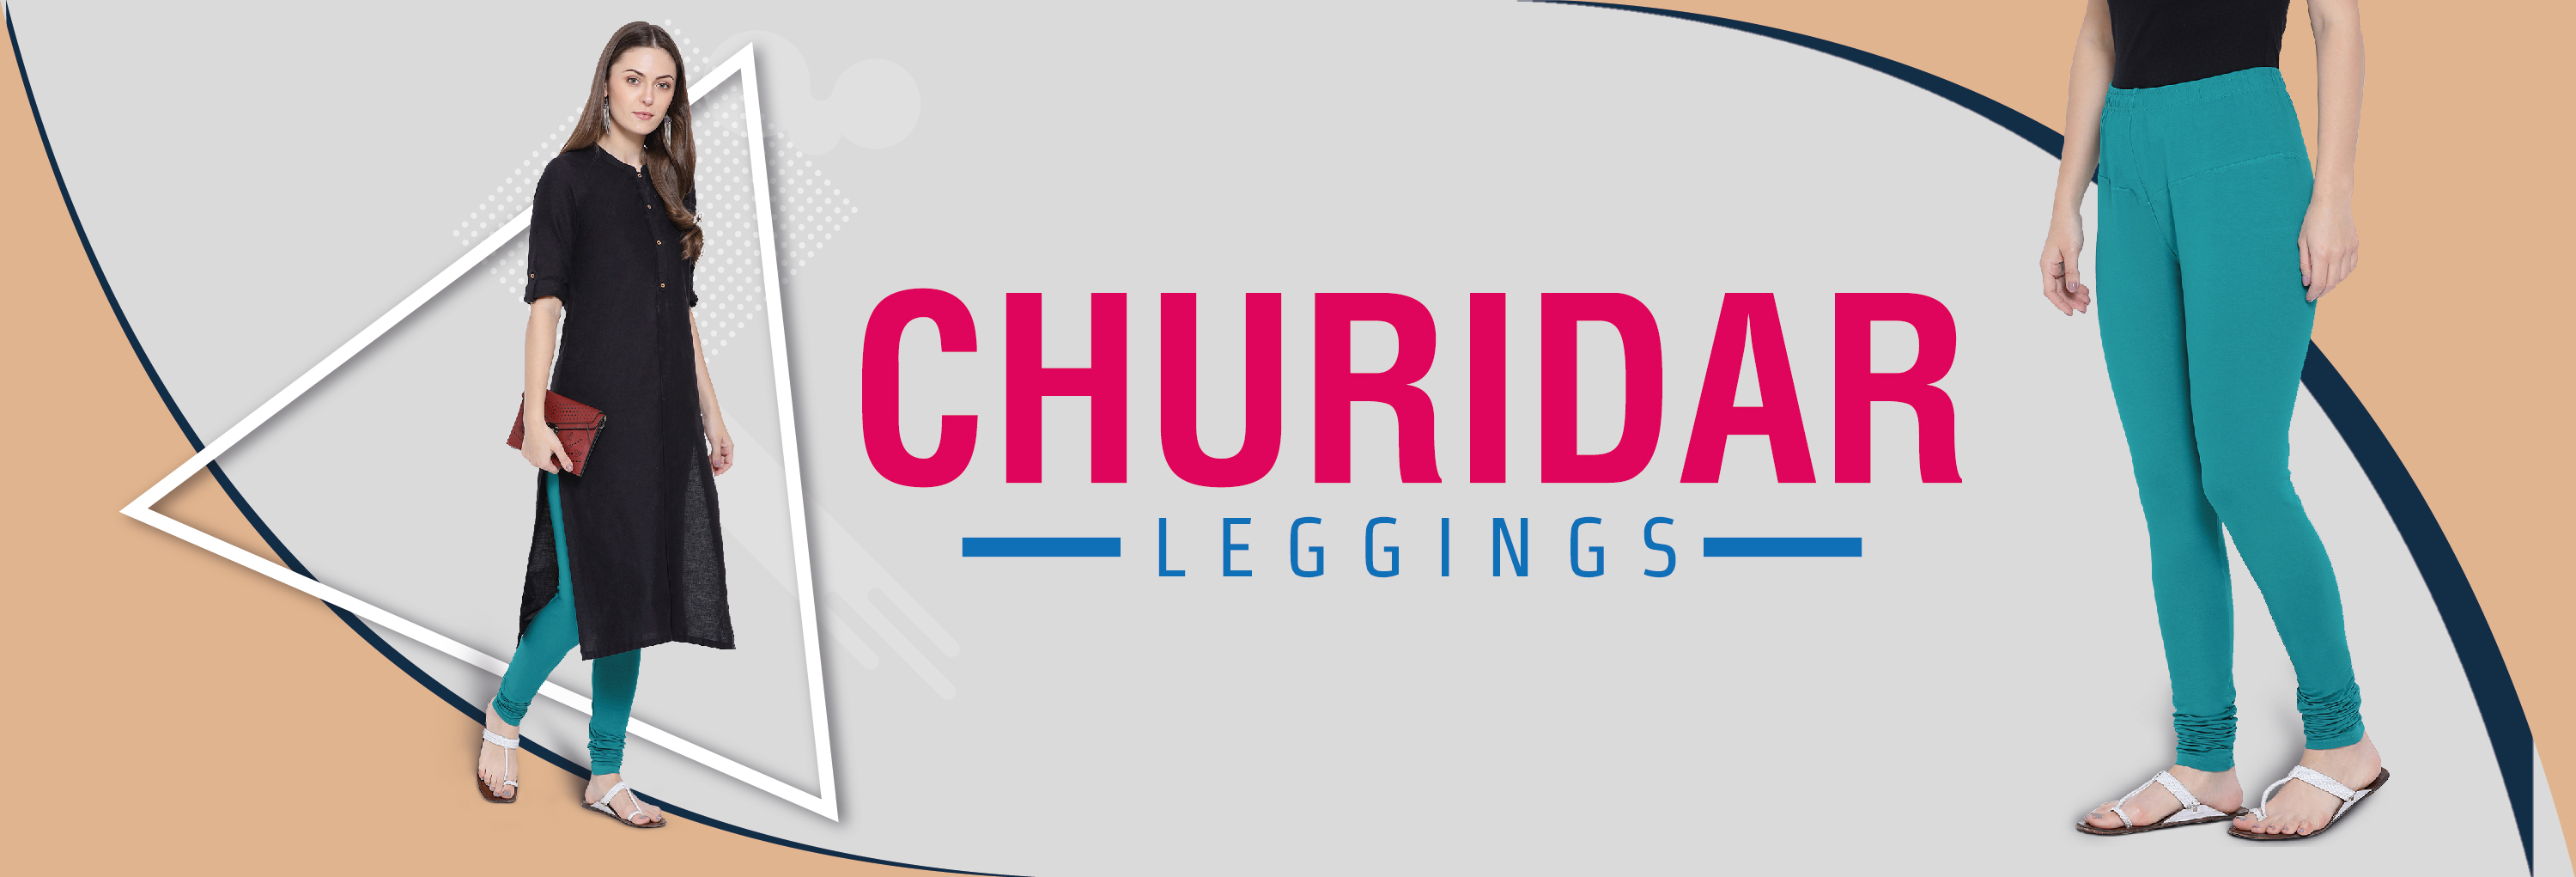 Golden Churidar Shimmer Fabric Womens Leggings at Rs 299.00 in